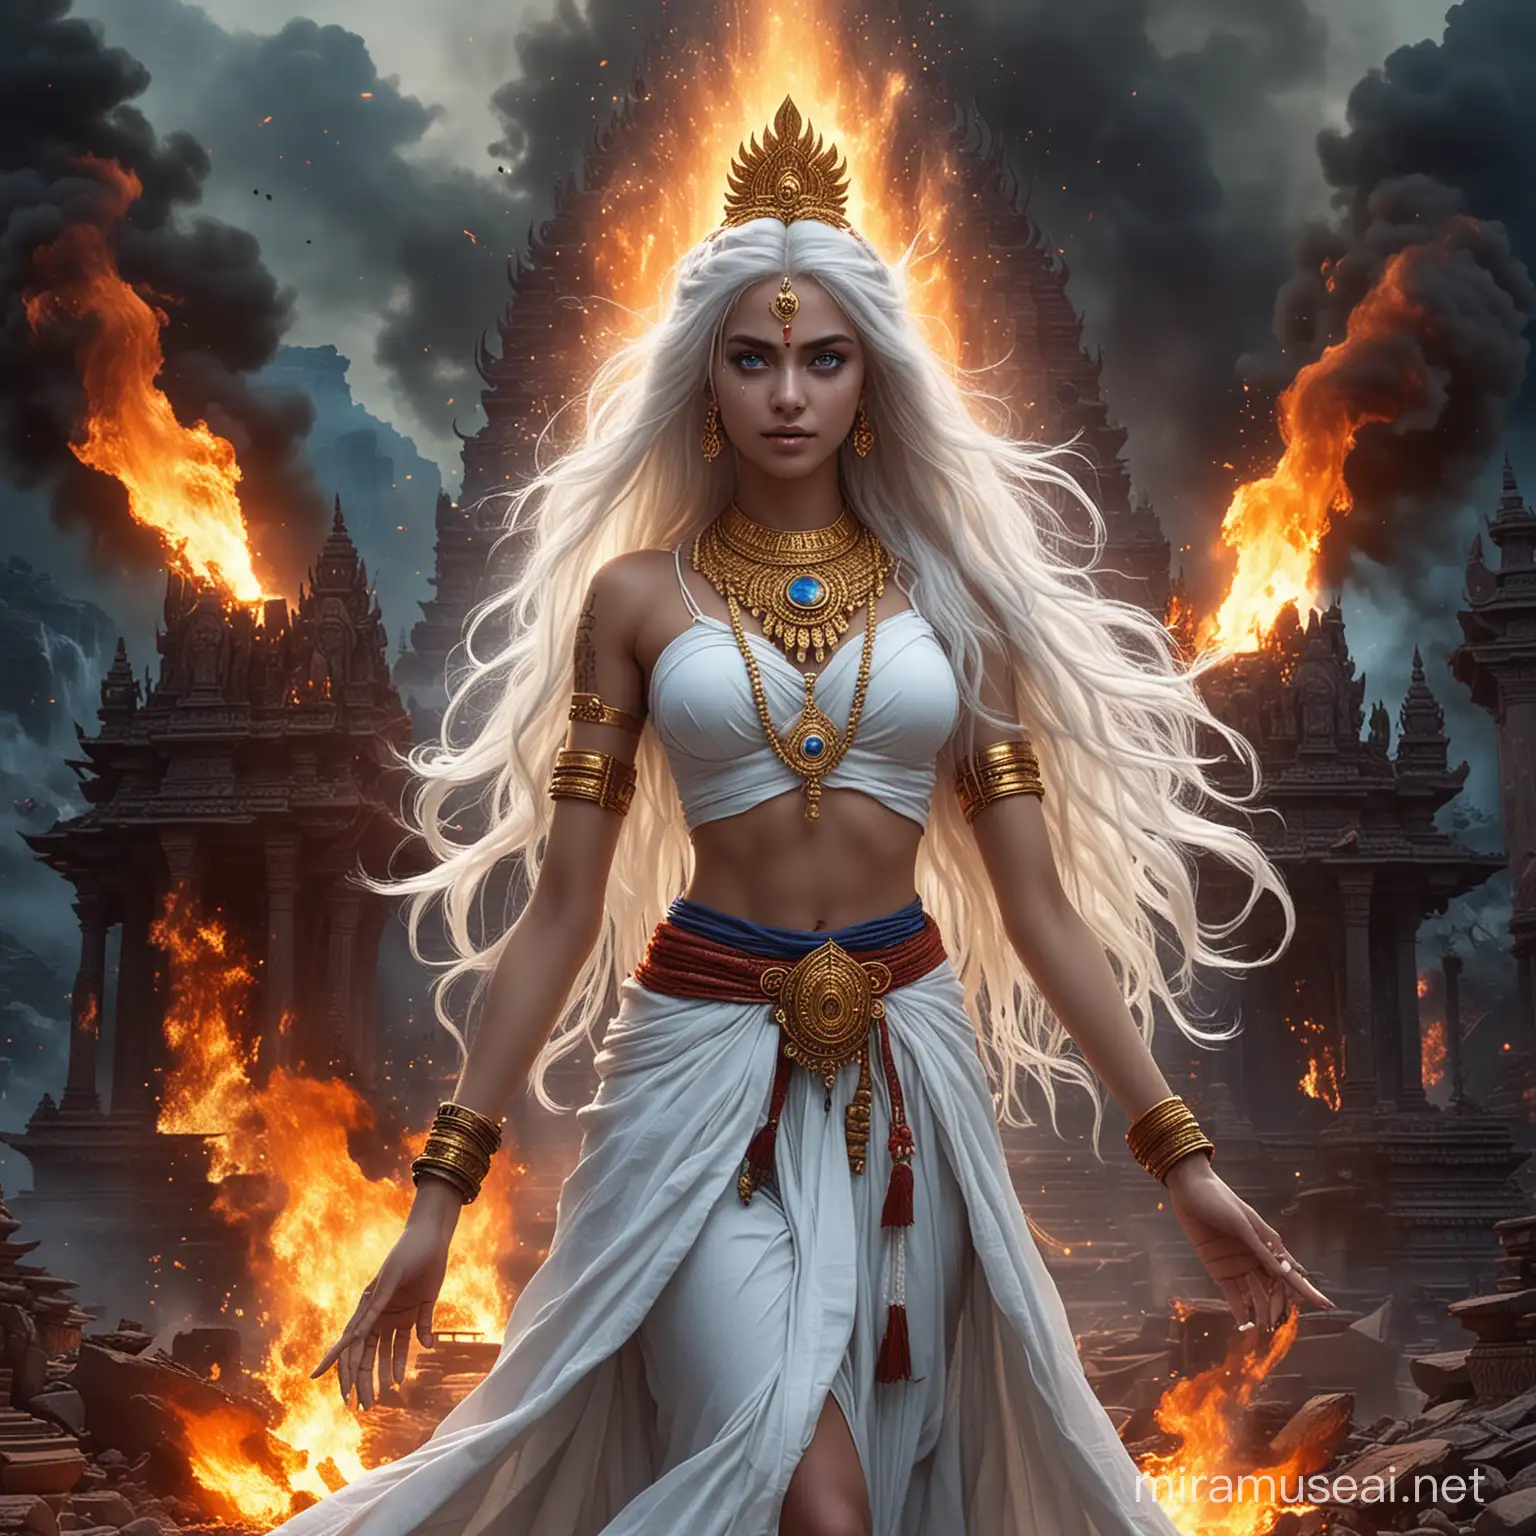 Mystical Hindu Empress Summoning Cosmic Fire Energy in Kaliman War